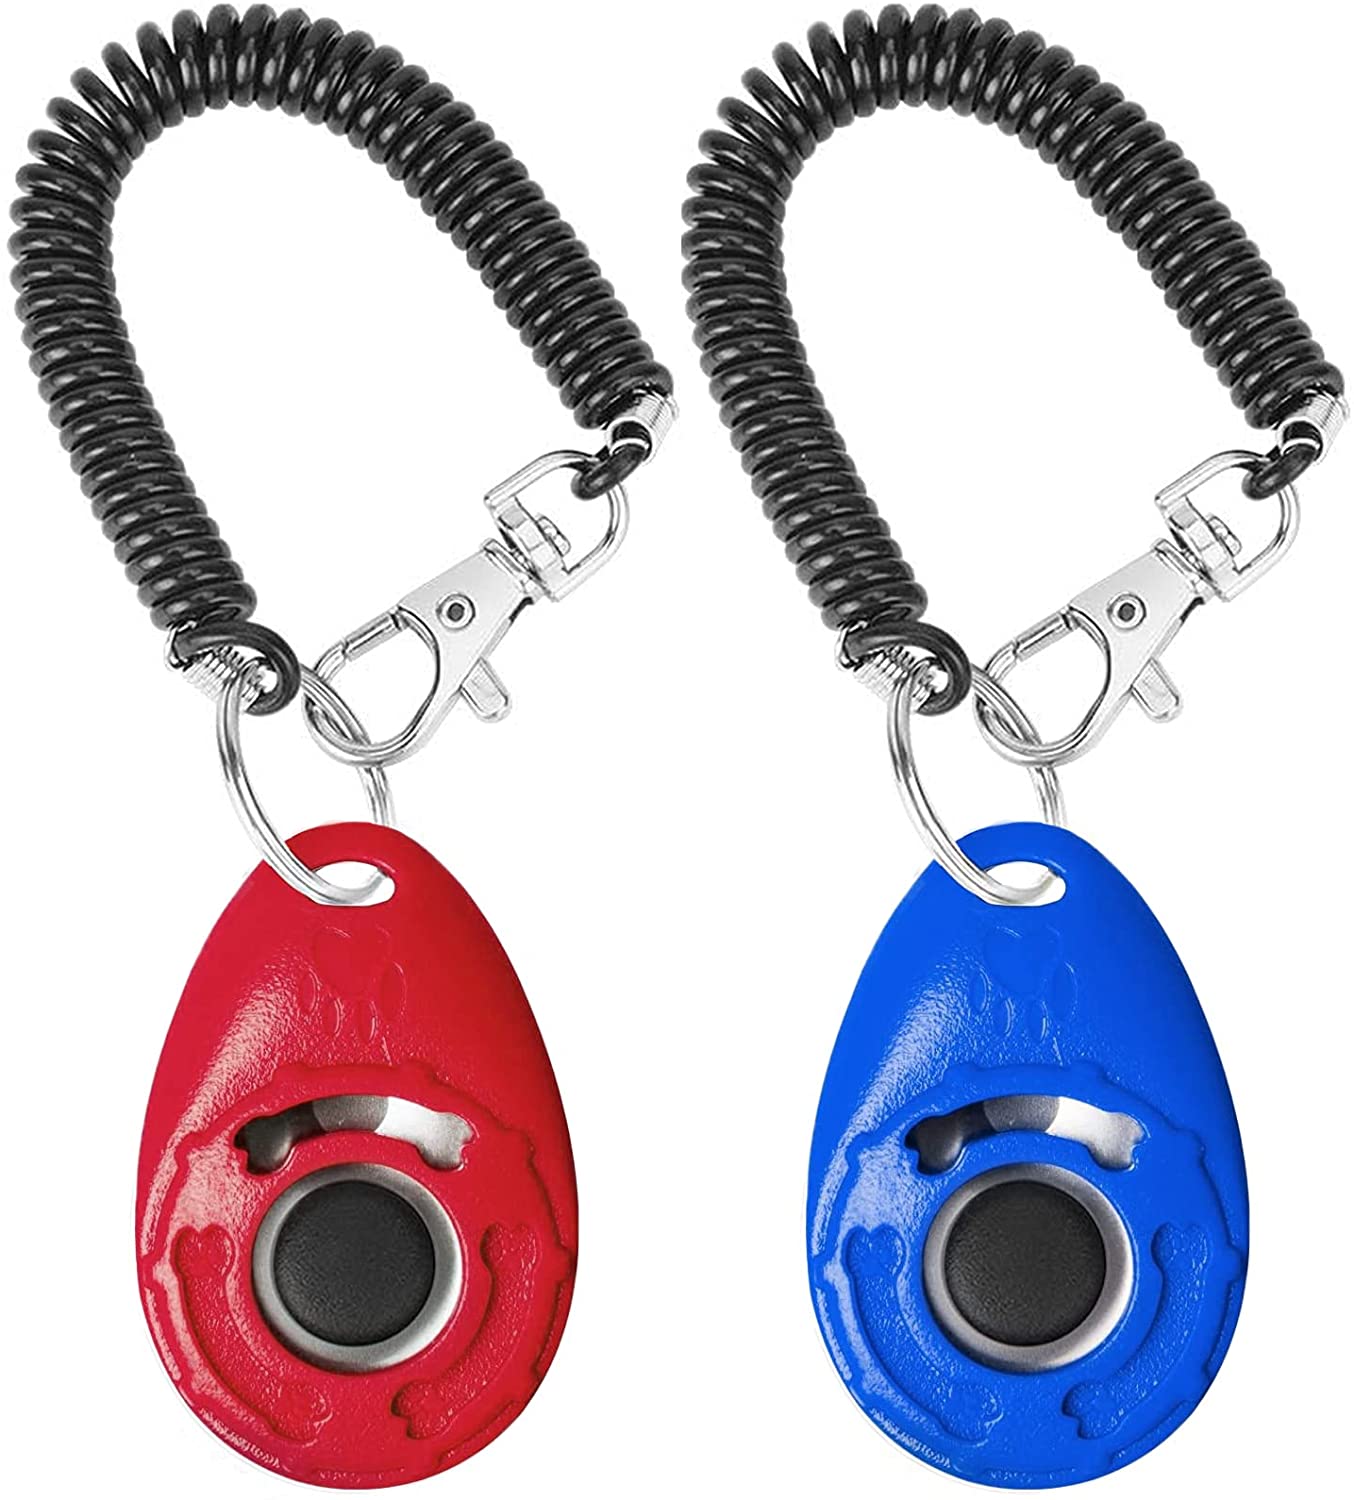 LaZimnInc Dog Training Clicker with Wrist Strap Pet Training Clicker Set 2-Pack Red + Black